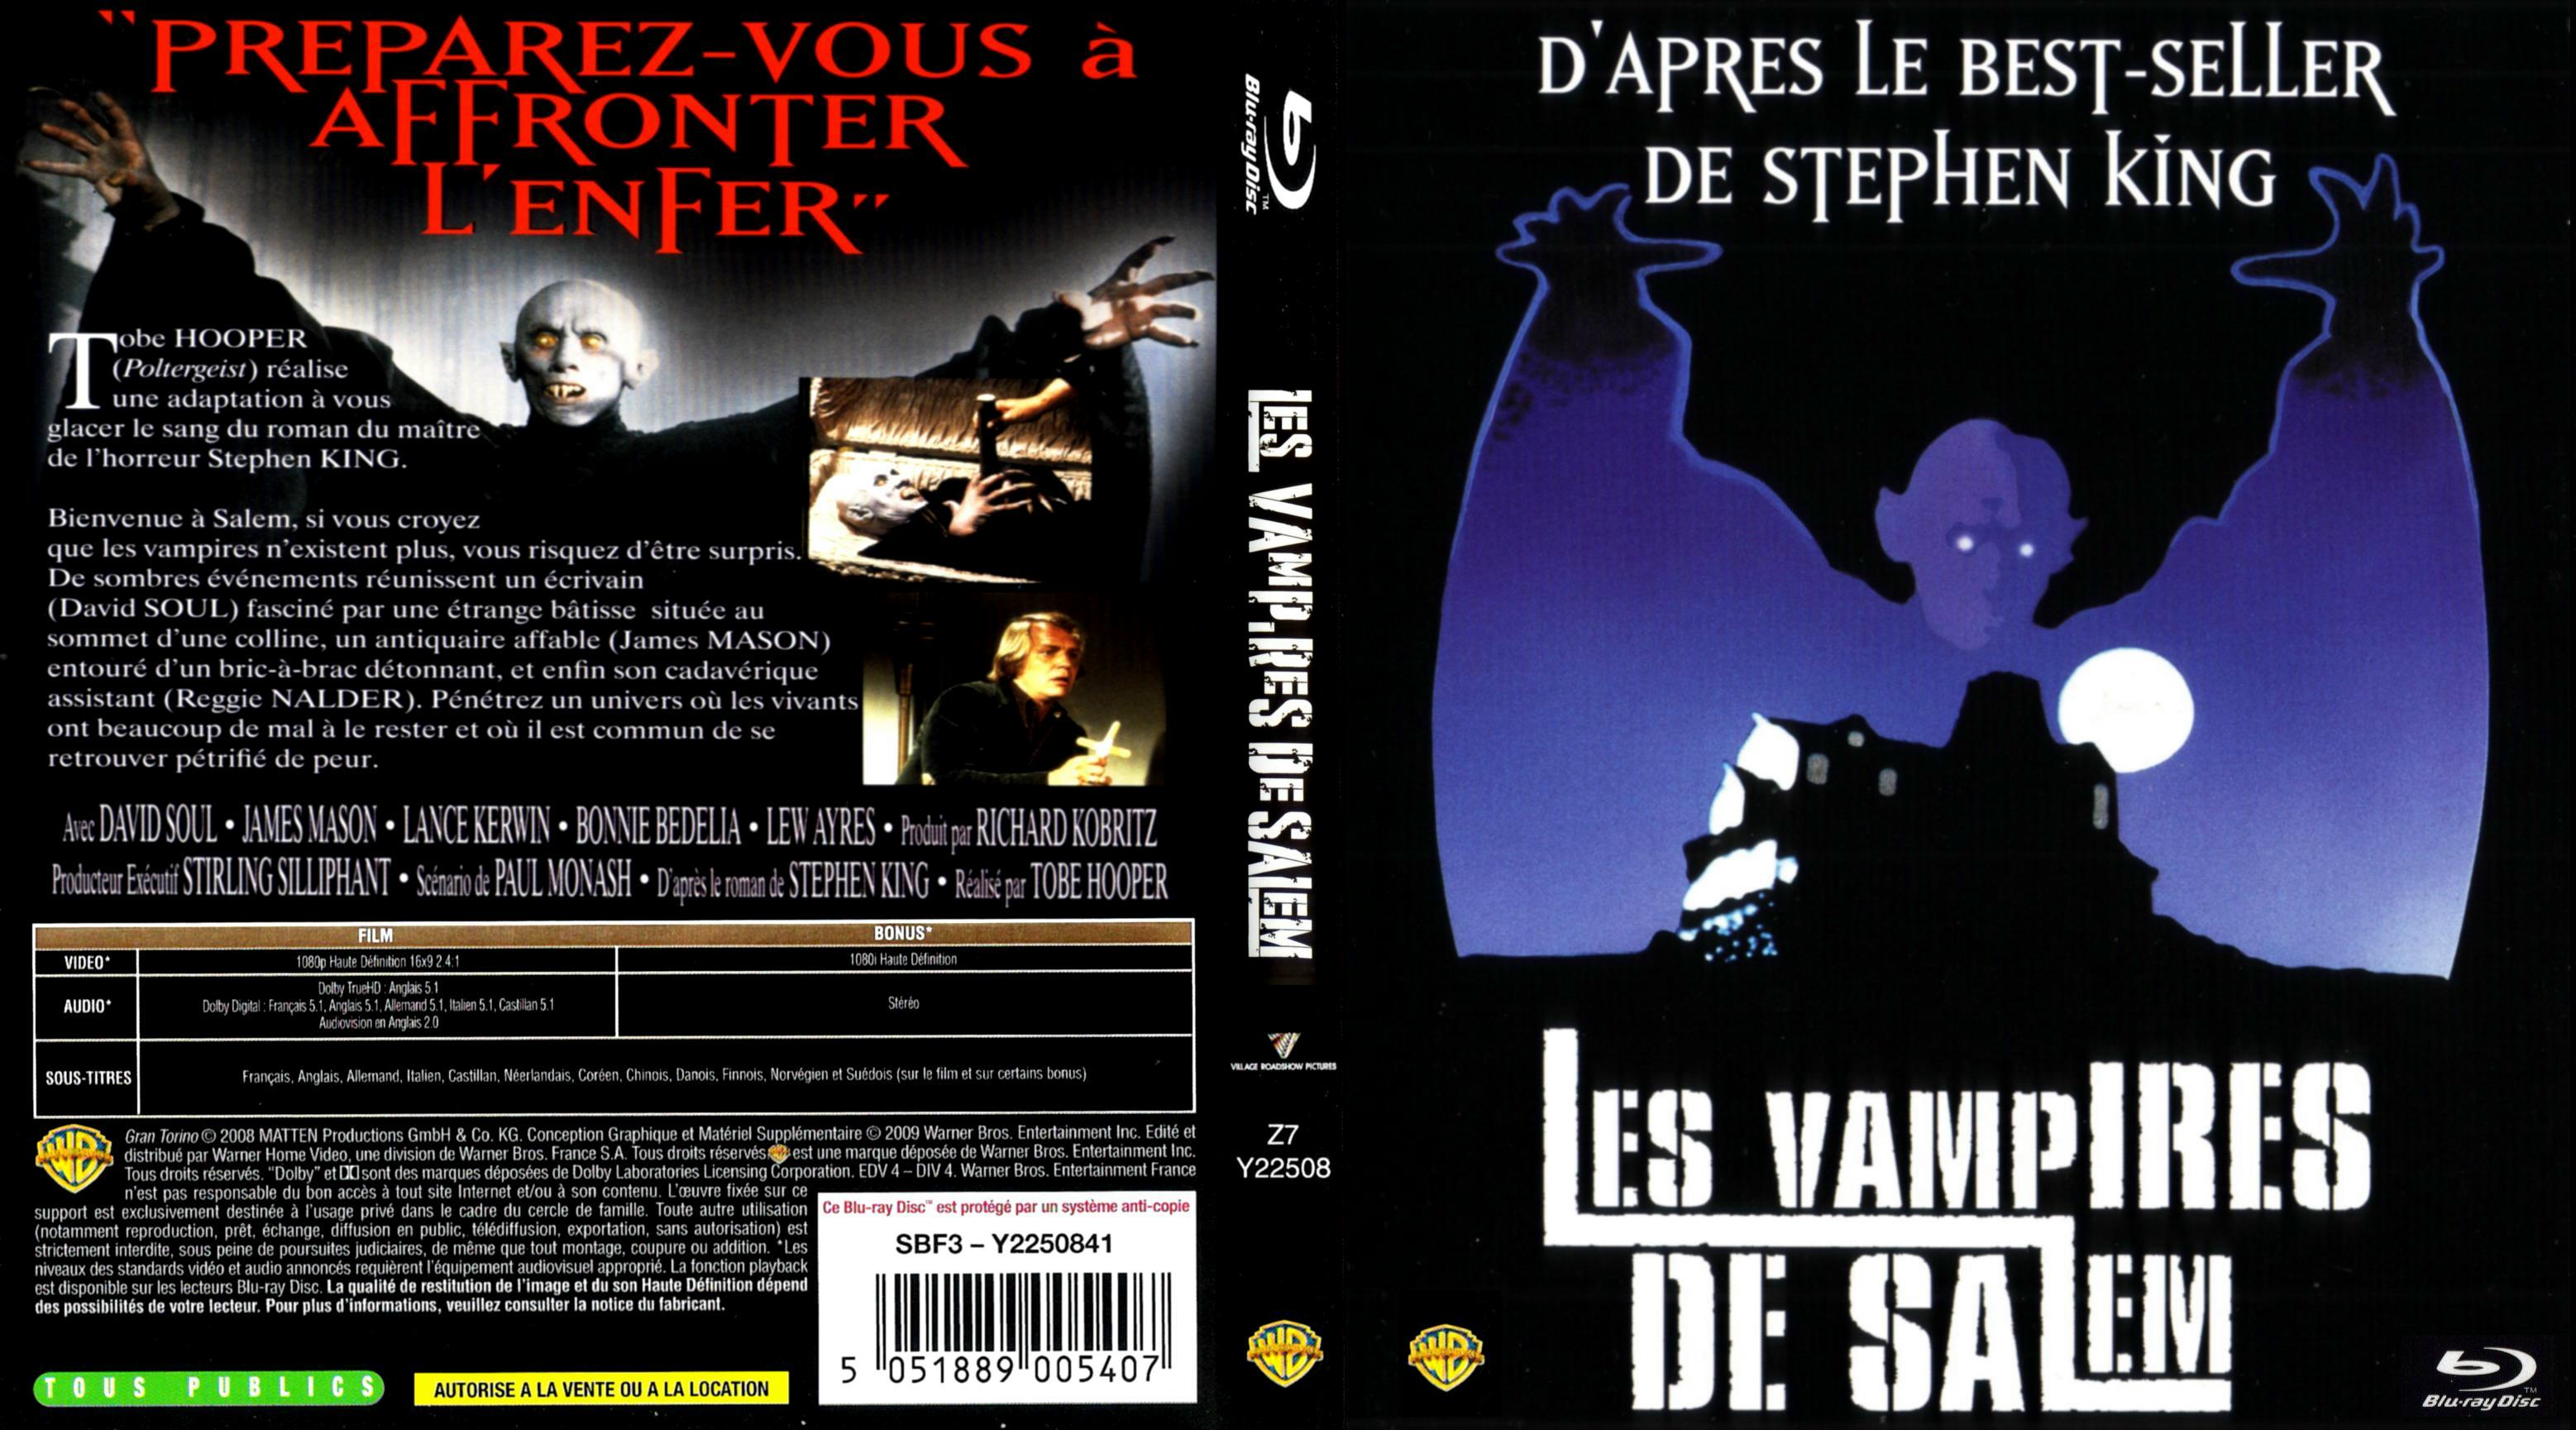 Jaquette DVD Les vampires de salem custom (BLU-RAY)